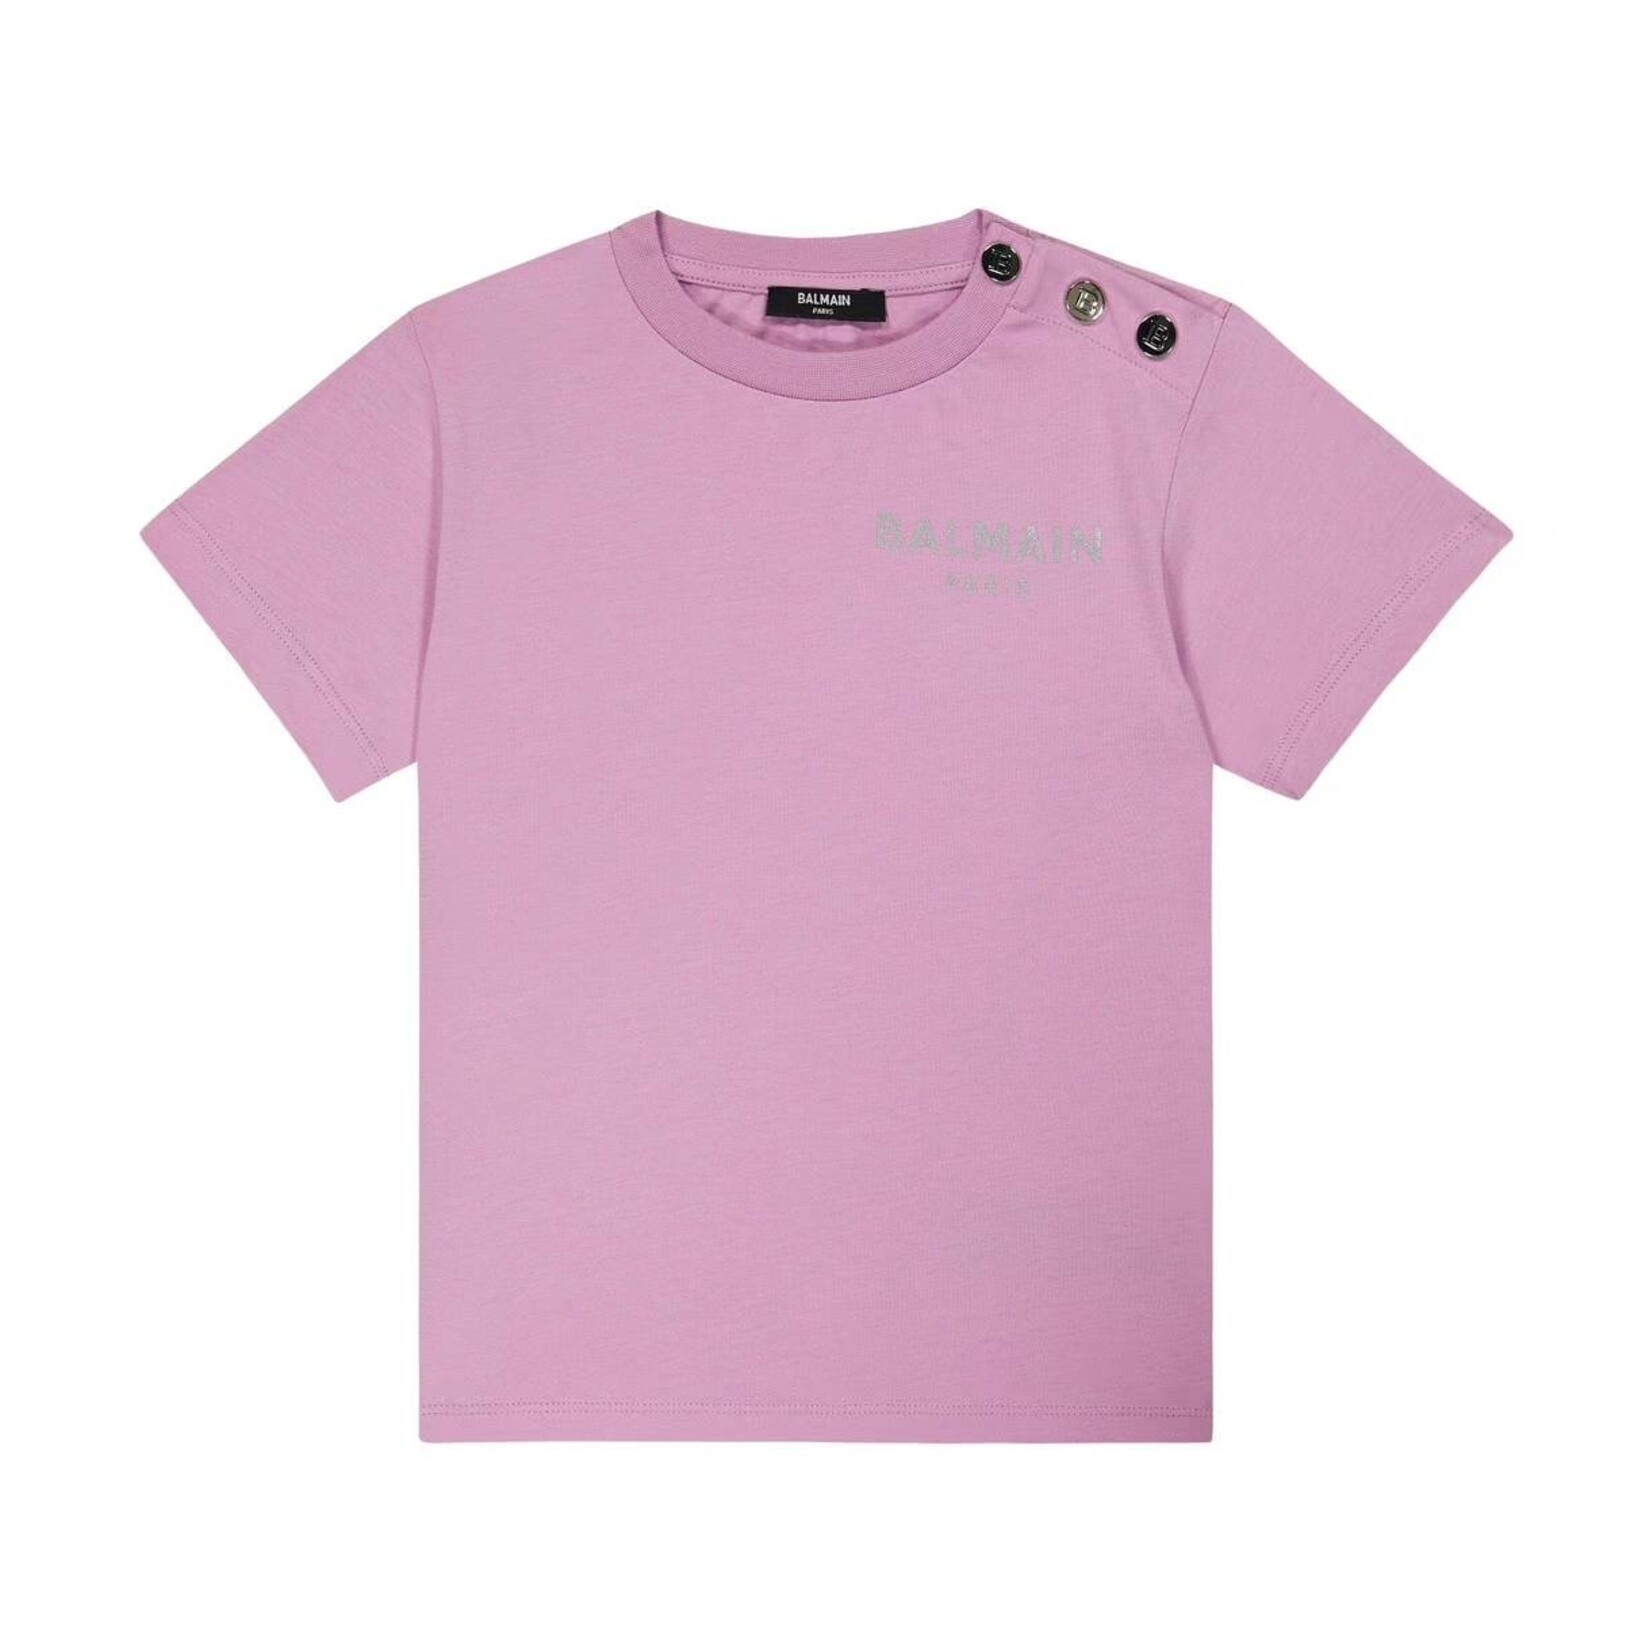 Balmain Balmain Logo Kids T-Shirty with Buttons